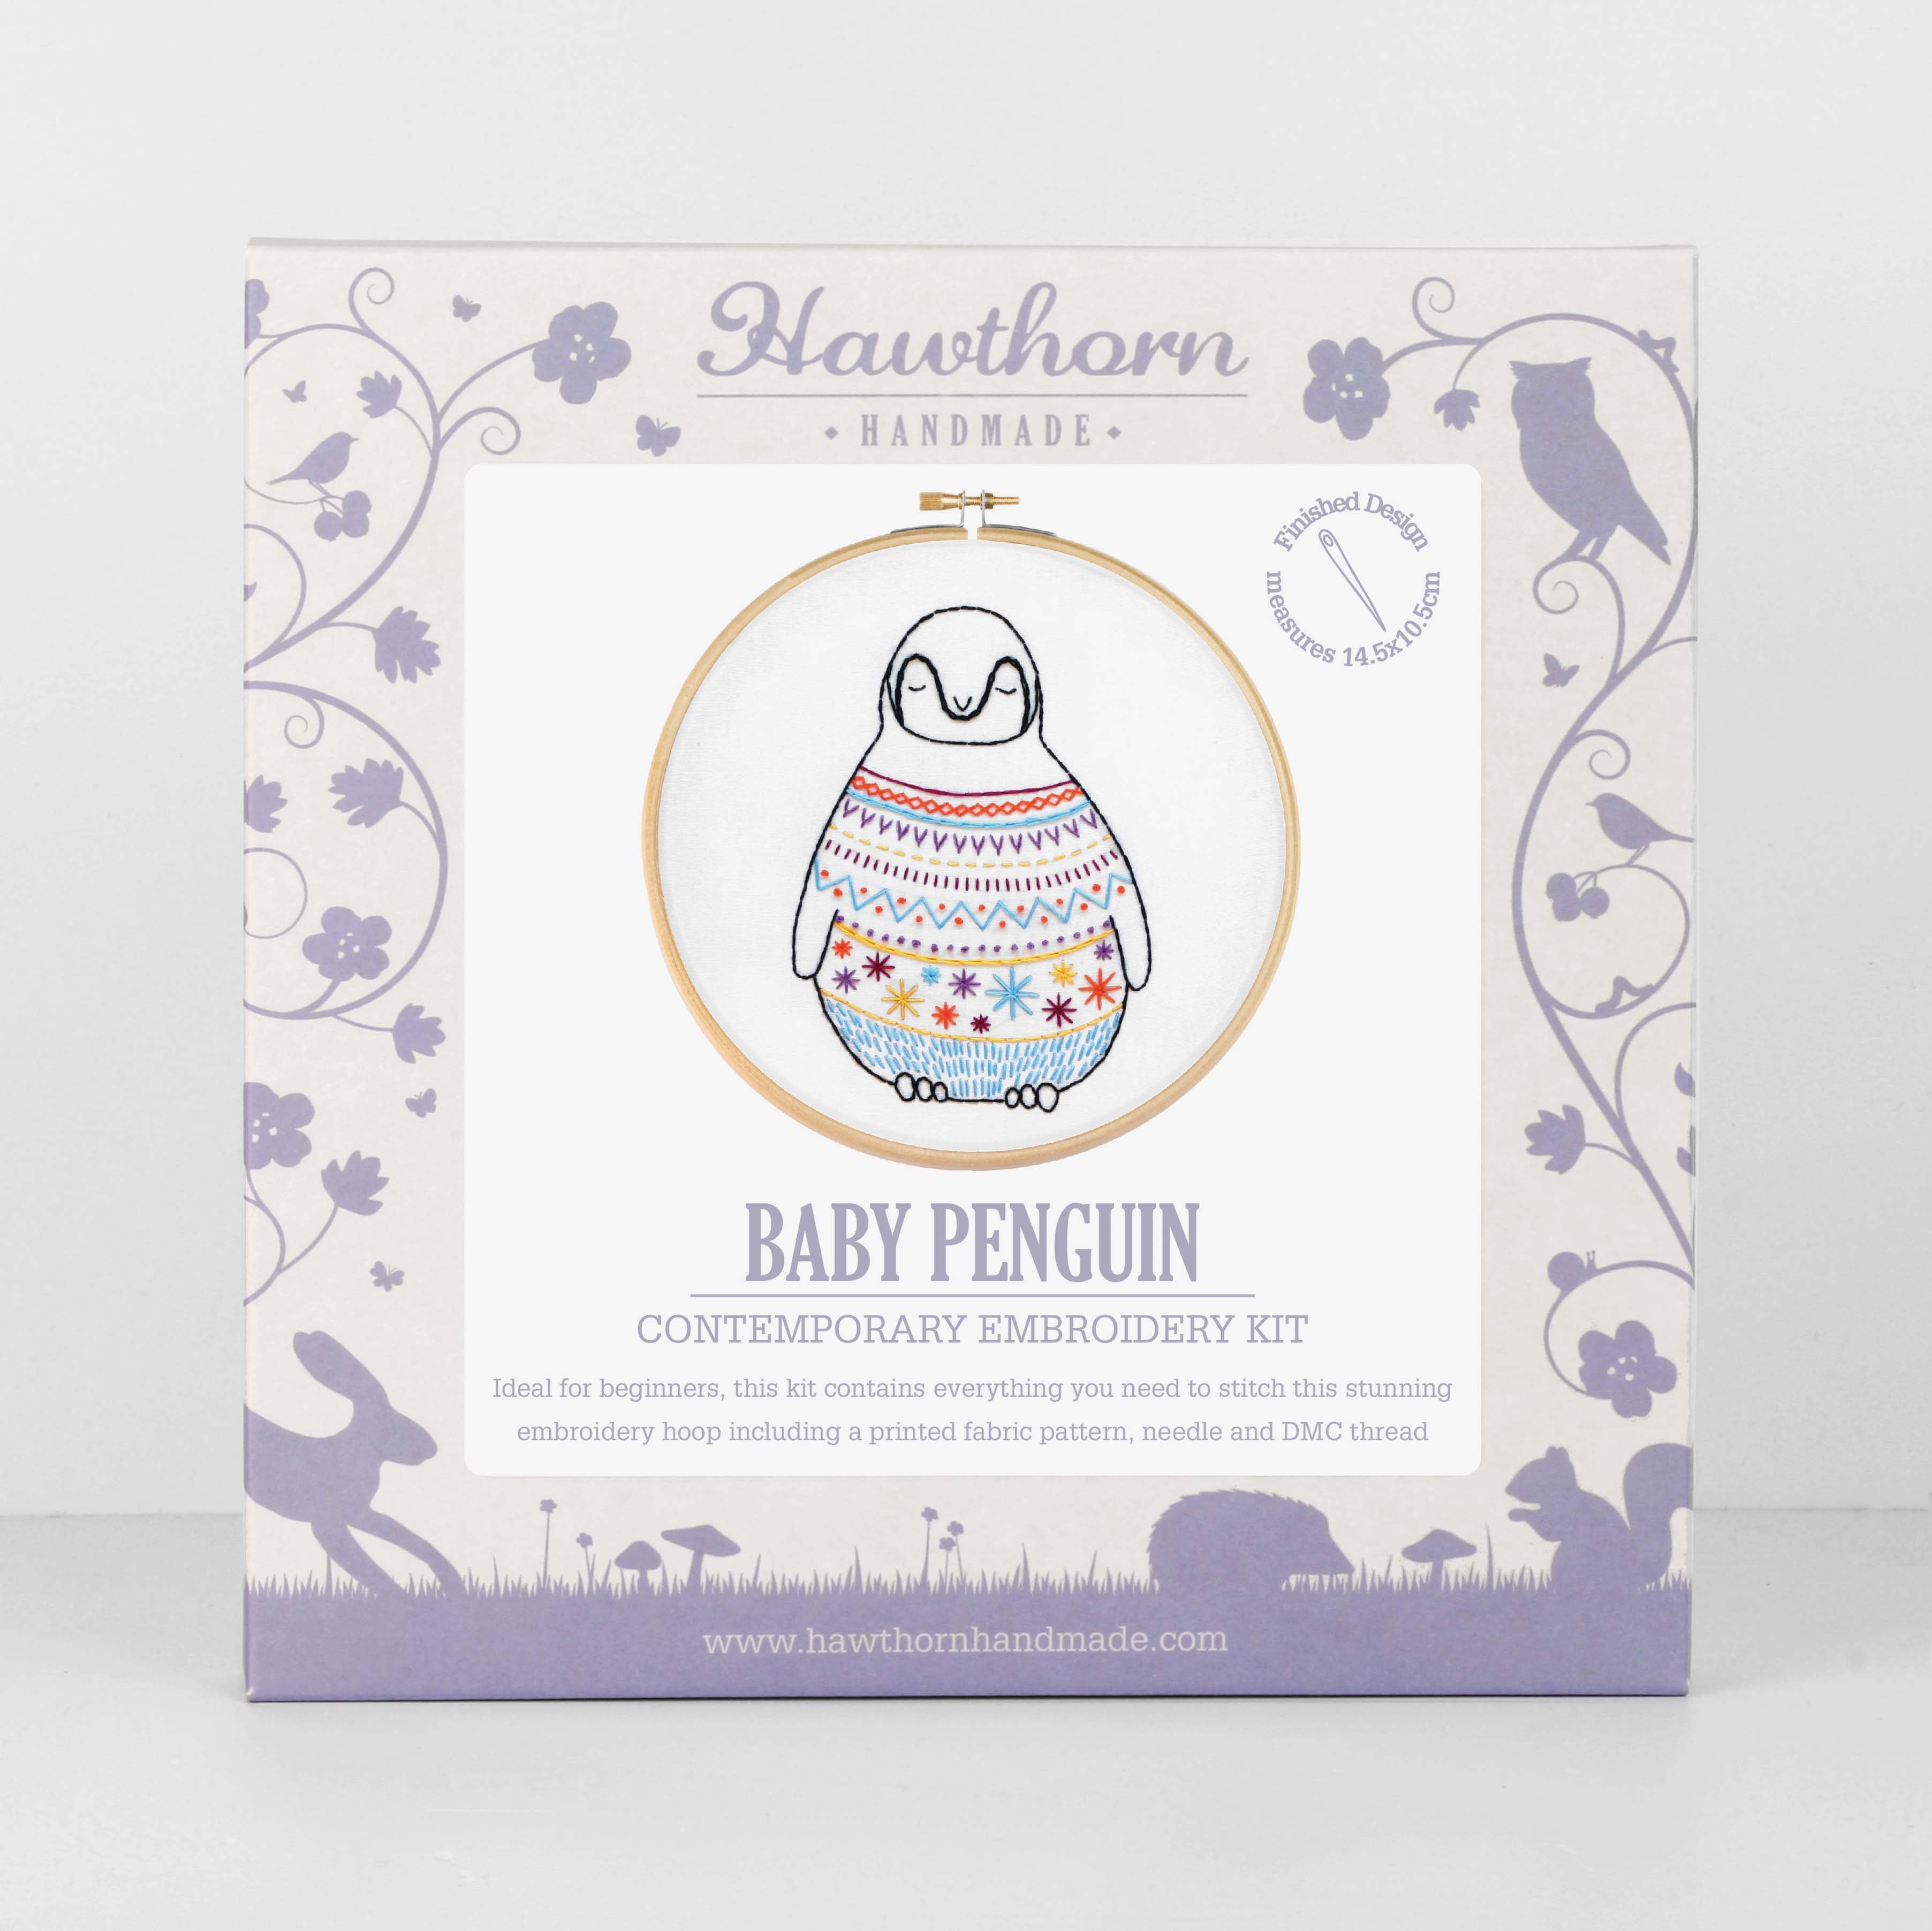 Baby Penguin Embroidery Kit, Hawthorn Handmade